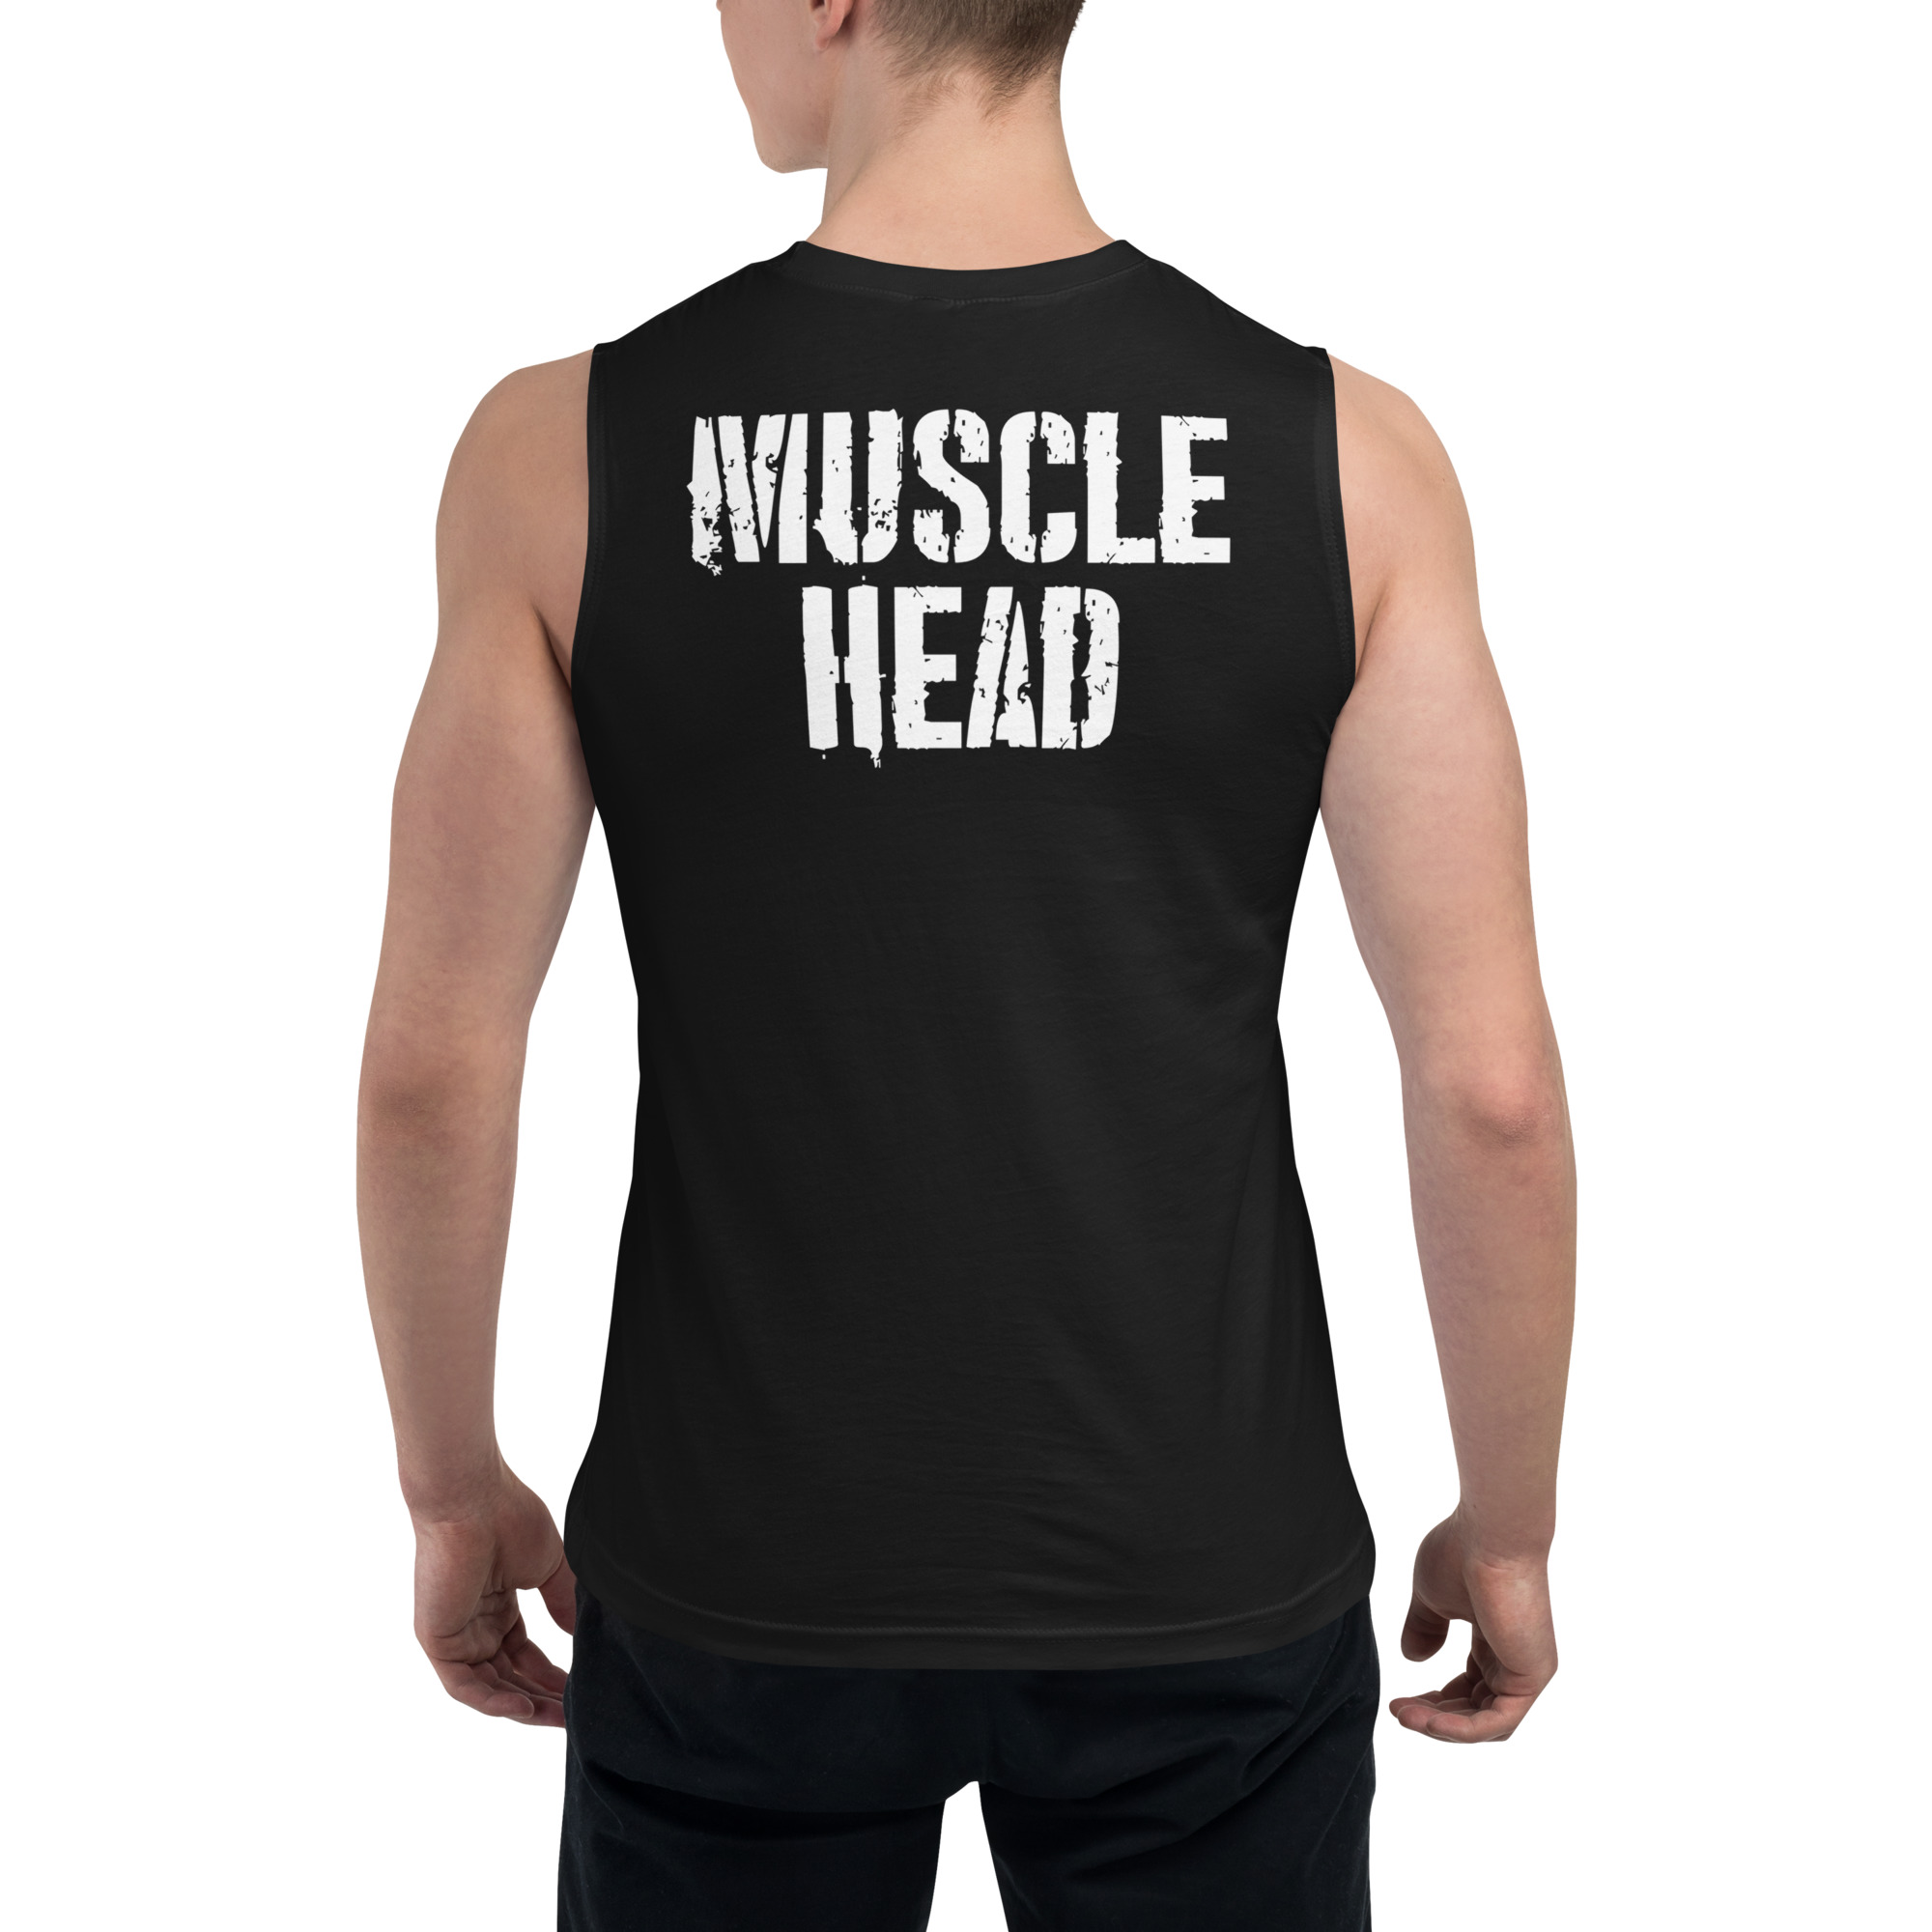 Muscle Shirt - Black - Muscle head